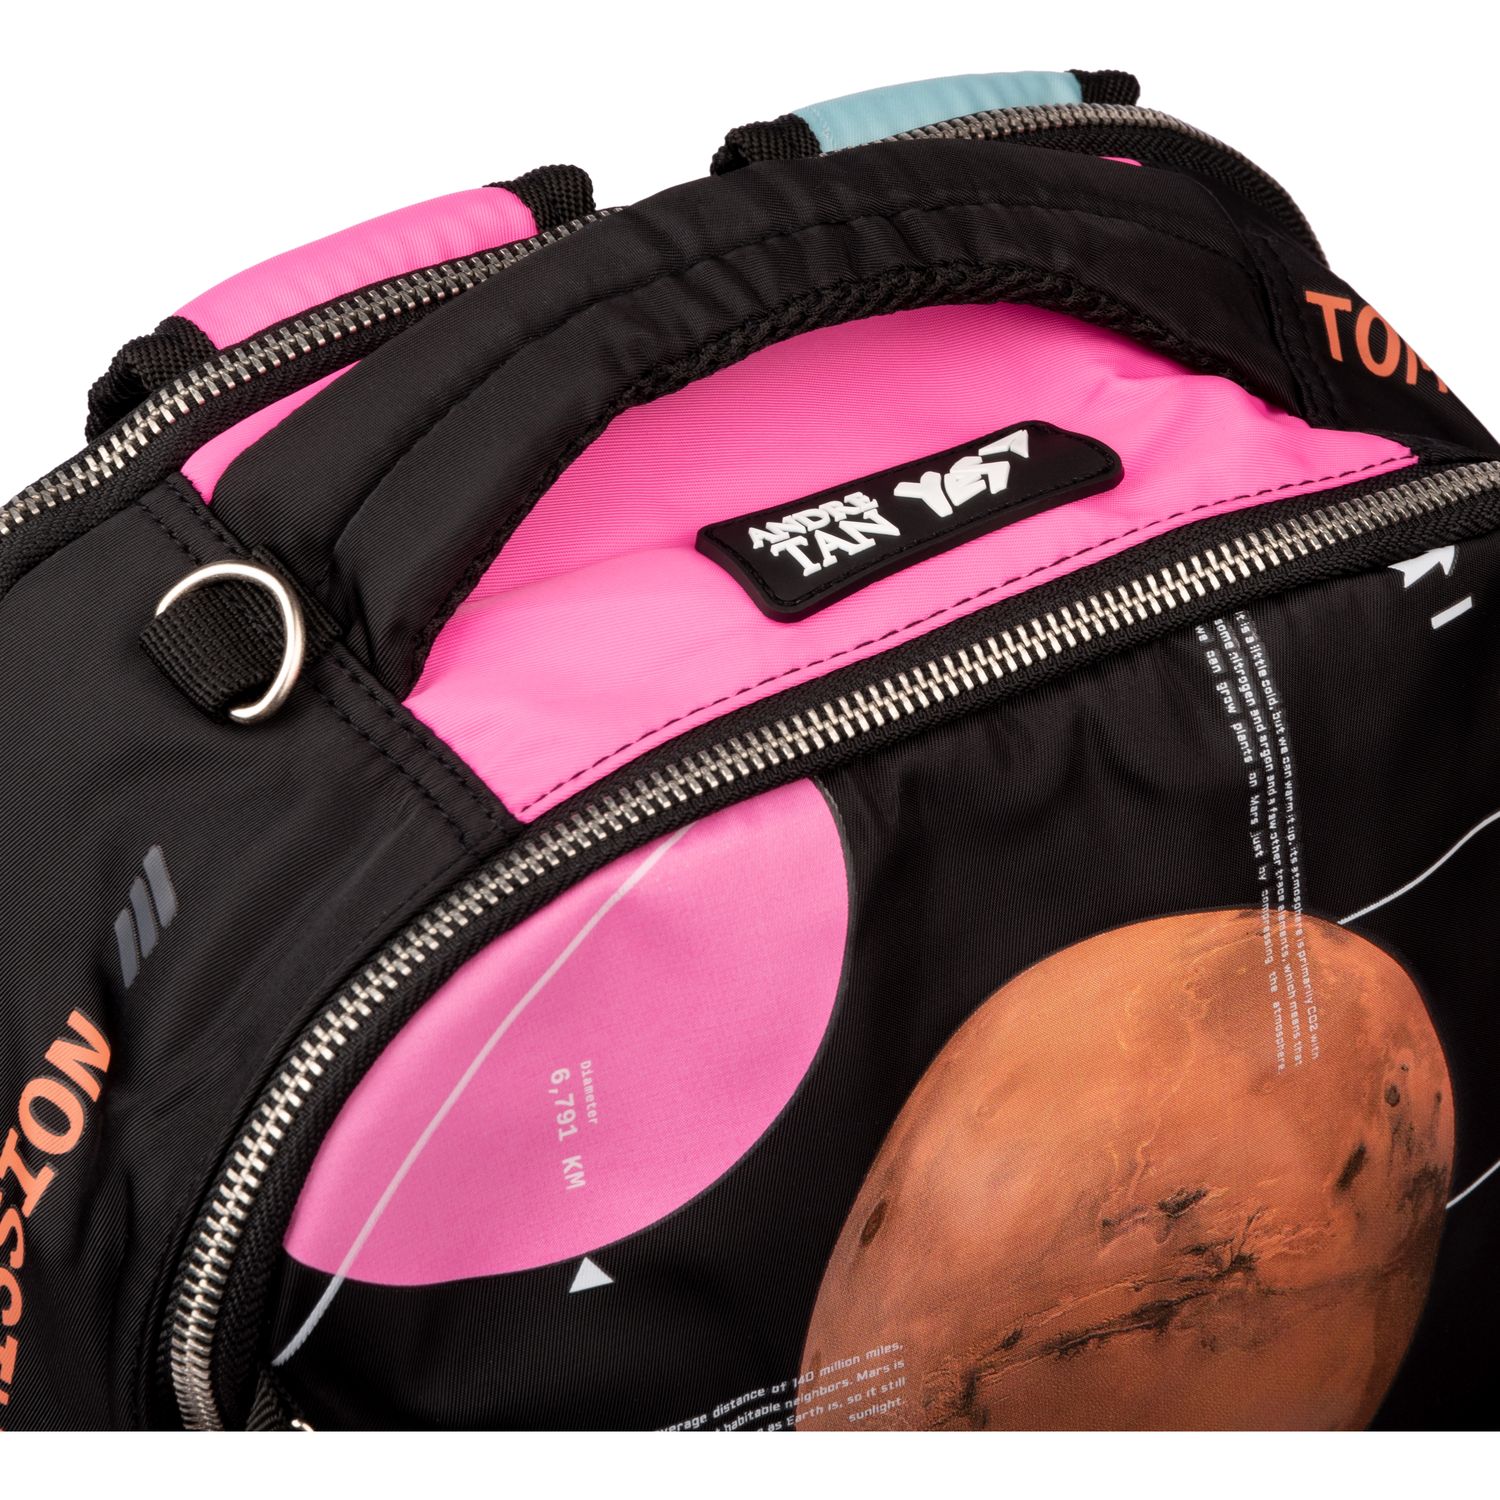 Рюкзак Yes TS-93 Andre Tan Space Pink, чорний з рожевим (559036) - фото 8